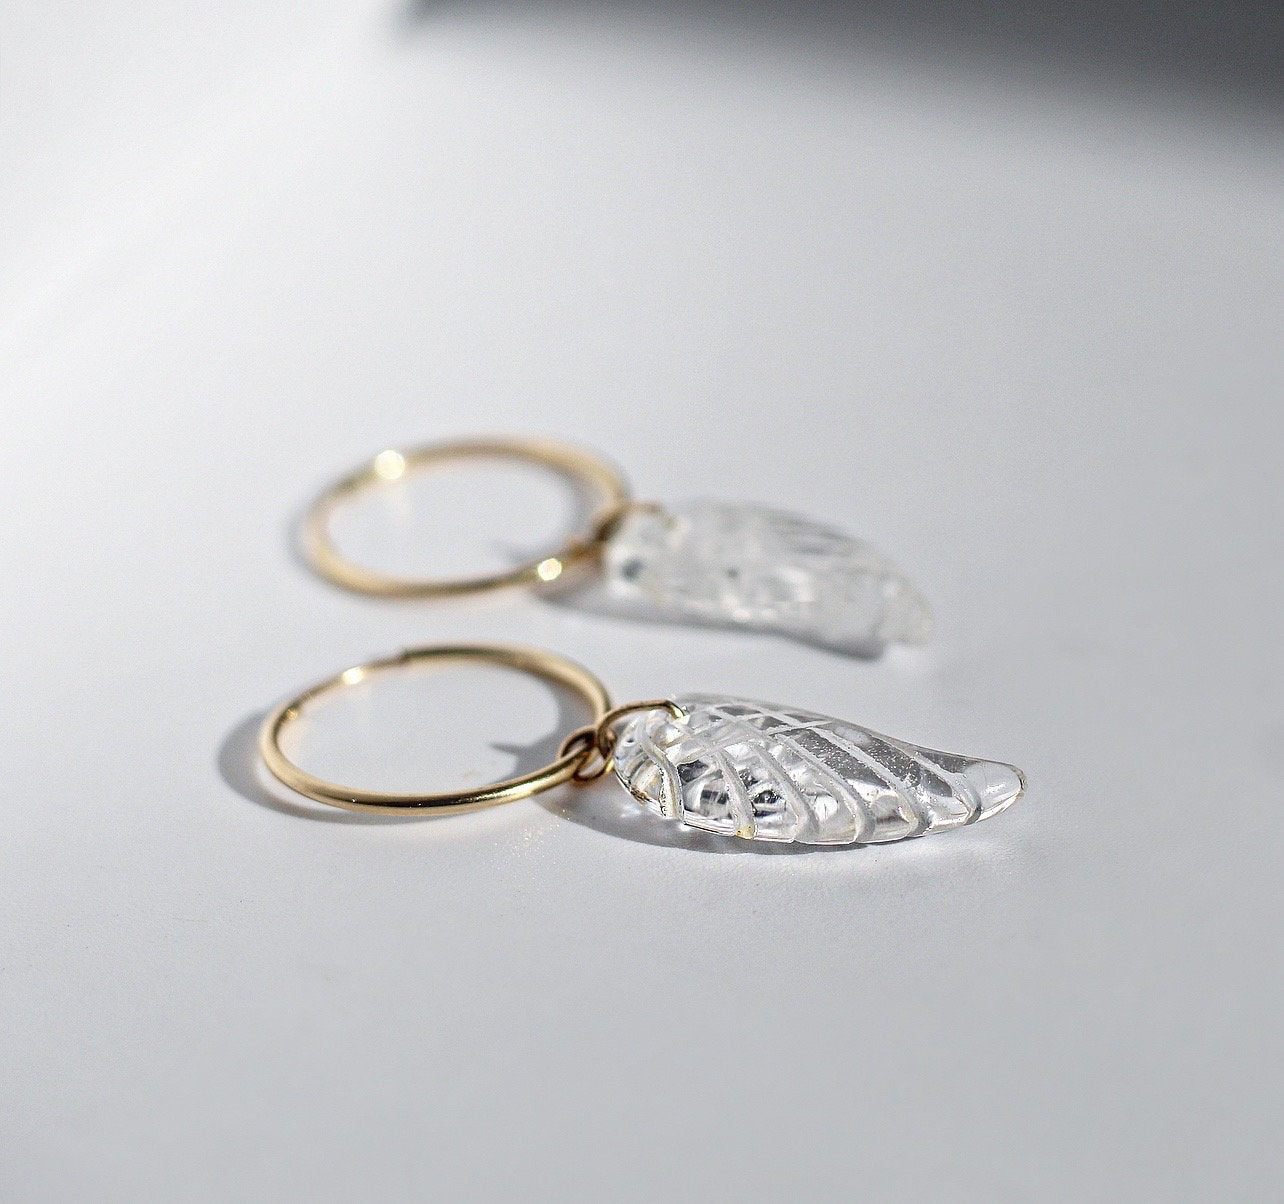 Crystal Angel Wing Earrings, Angel Wing Charm Earrings, Angel Wing Jewelry, Angel Wing Earrings Gold, Huggie Charm Hoops, Angel Jewelry